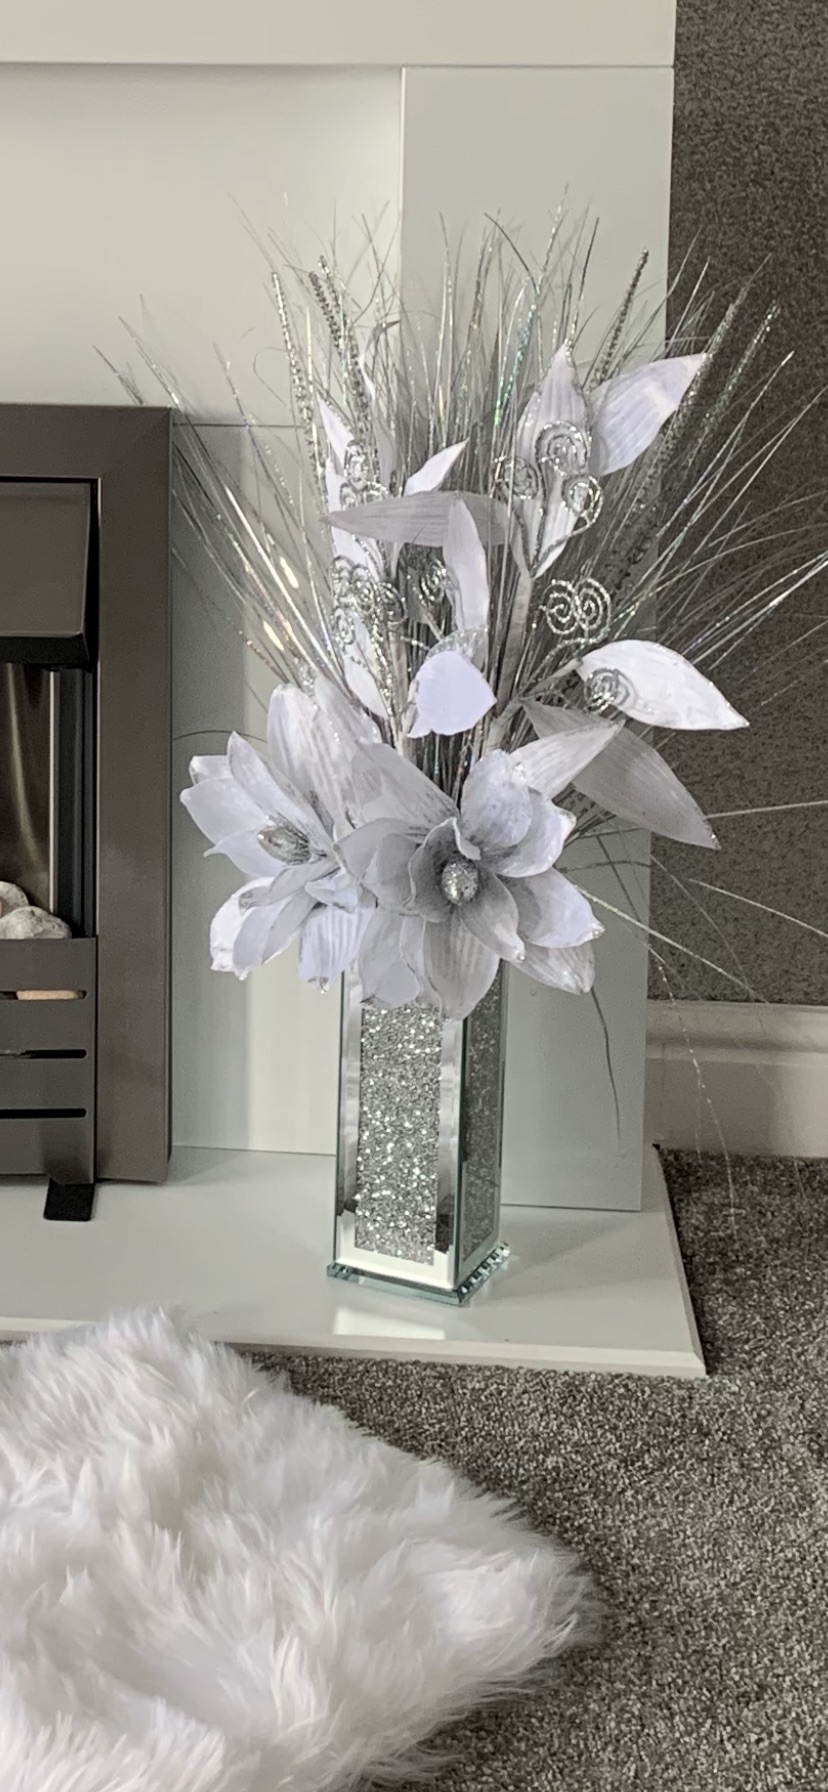 Crush vase and flowers 